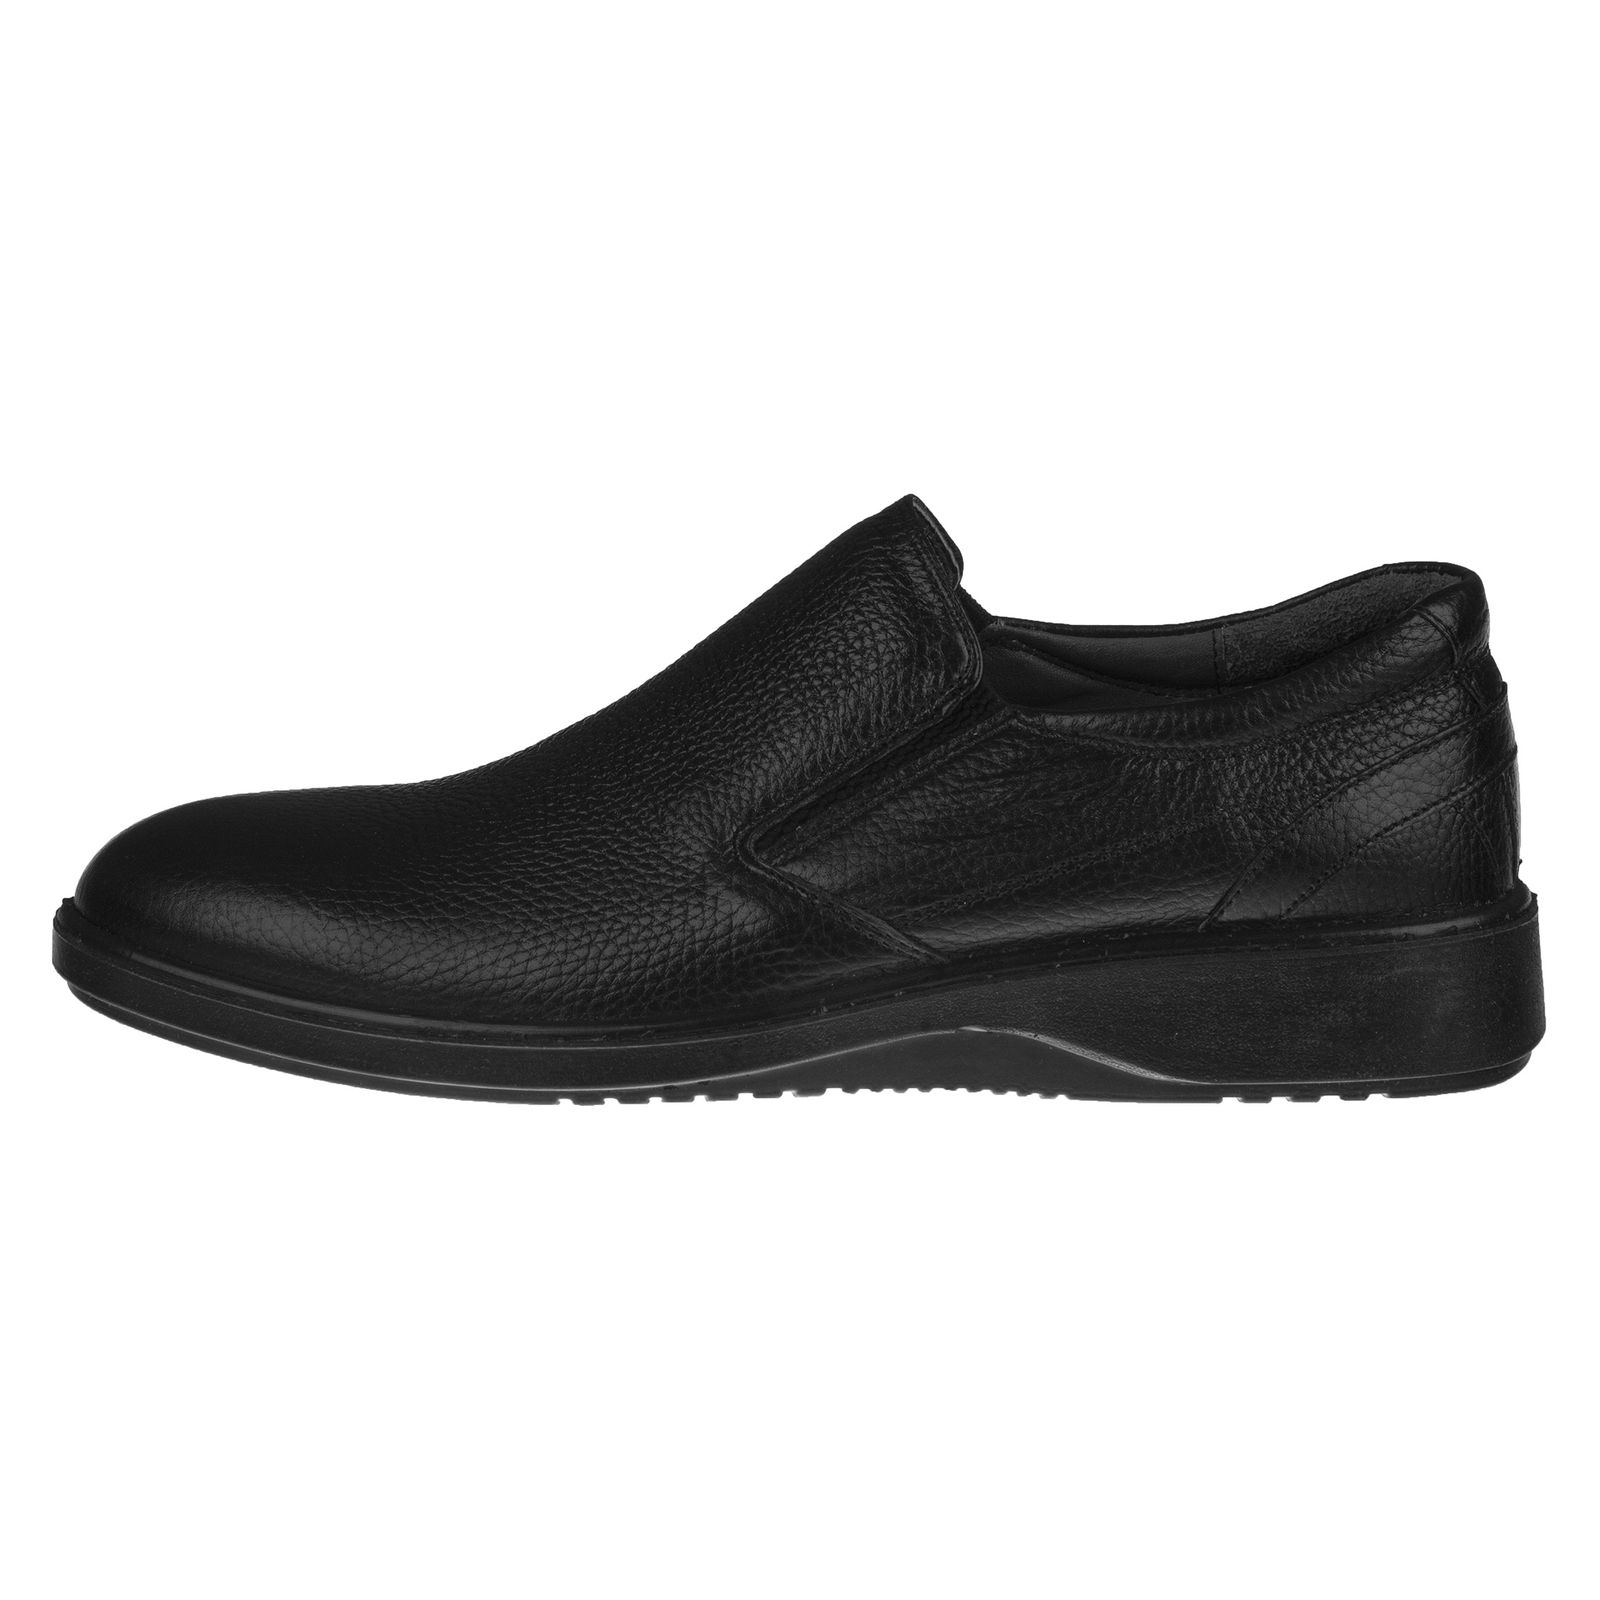 کفش روزمره مردانه بلوط مدل 7216A503-101 - مشکی - 1